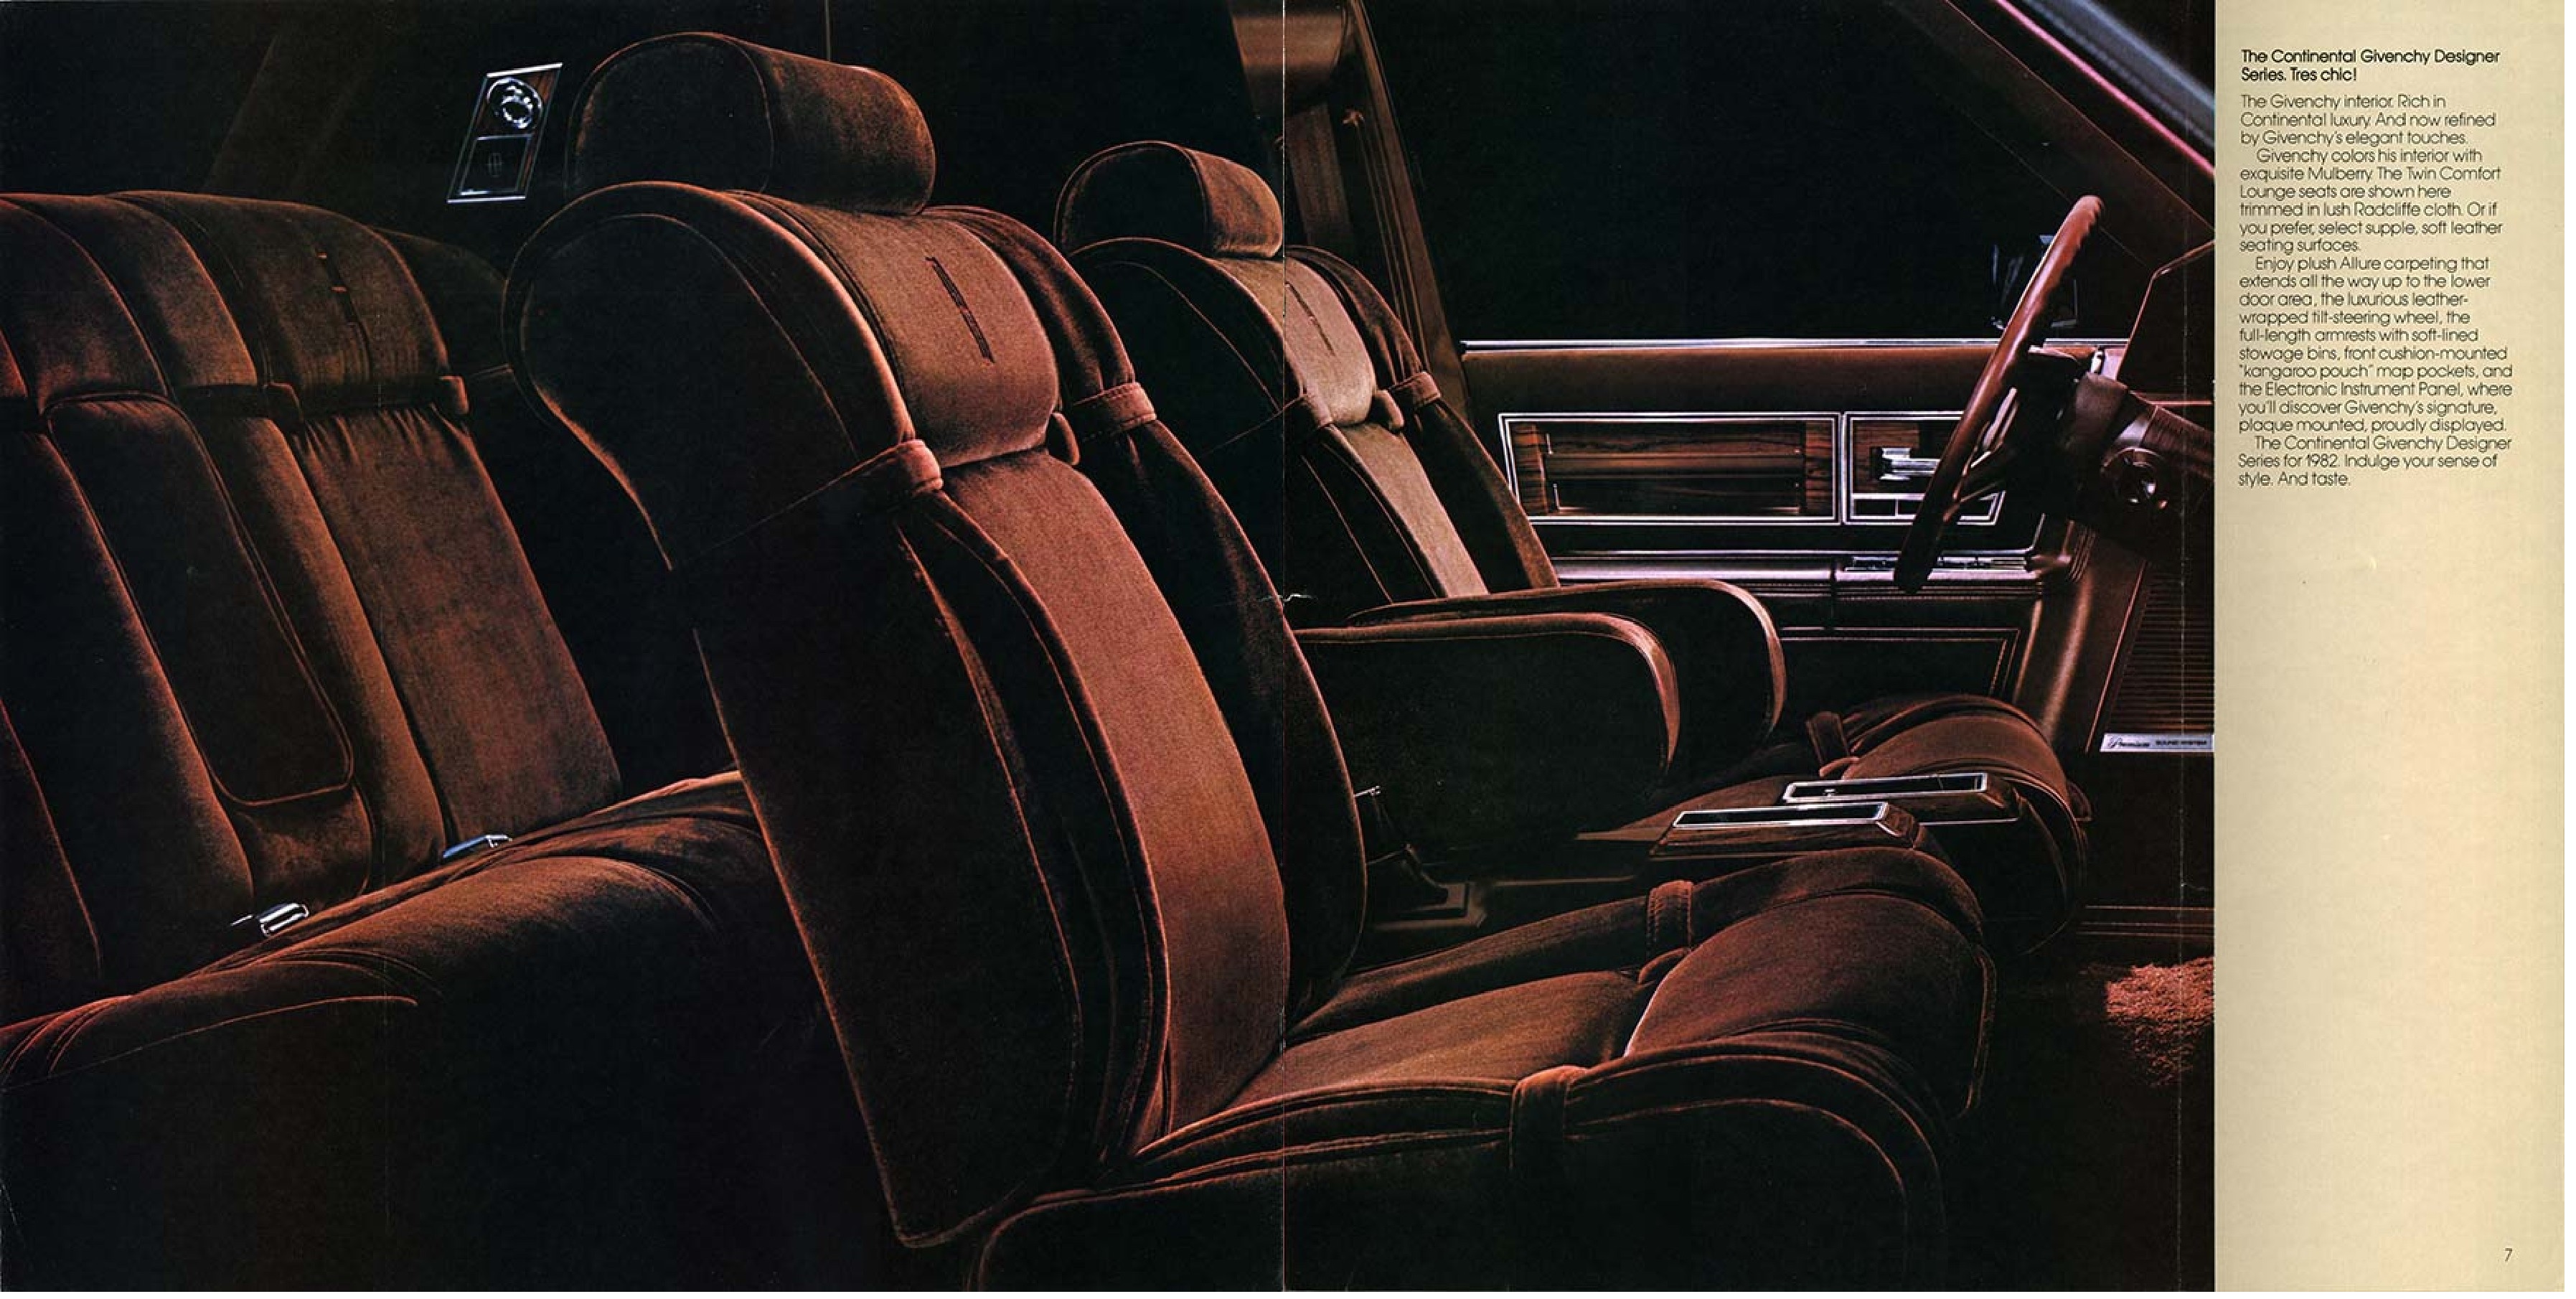 1982 Lincoln Continental 06-07